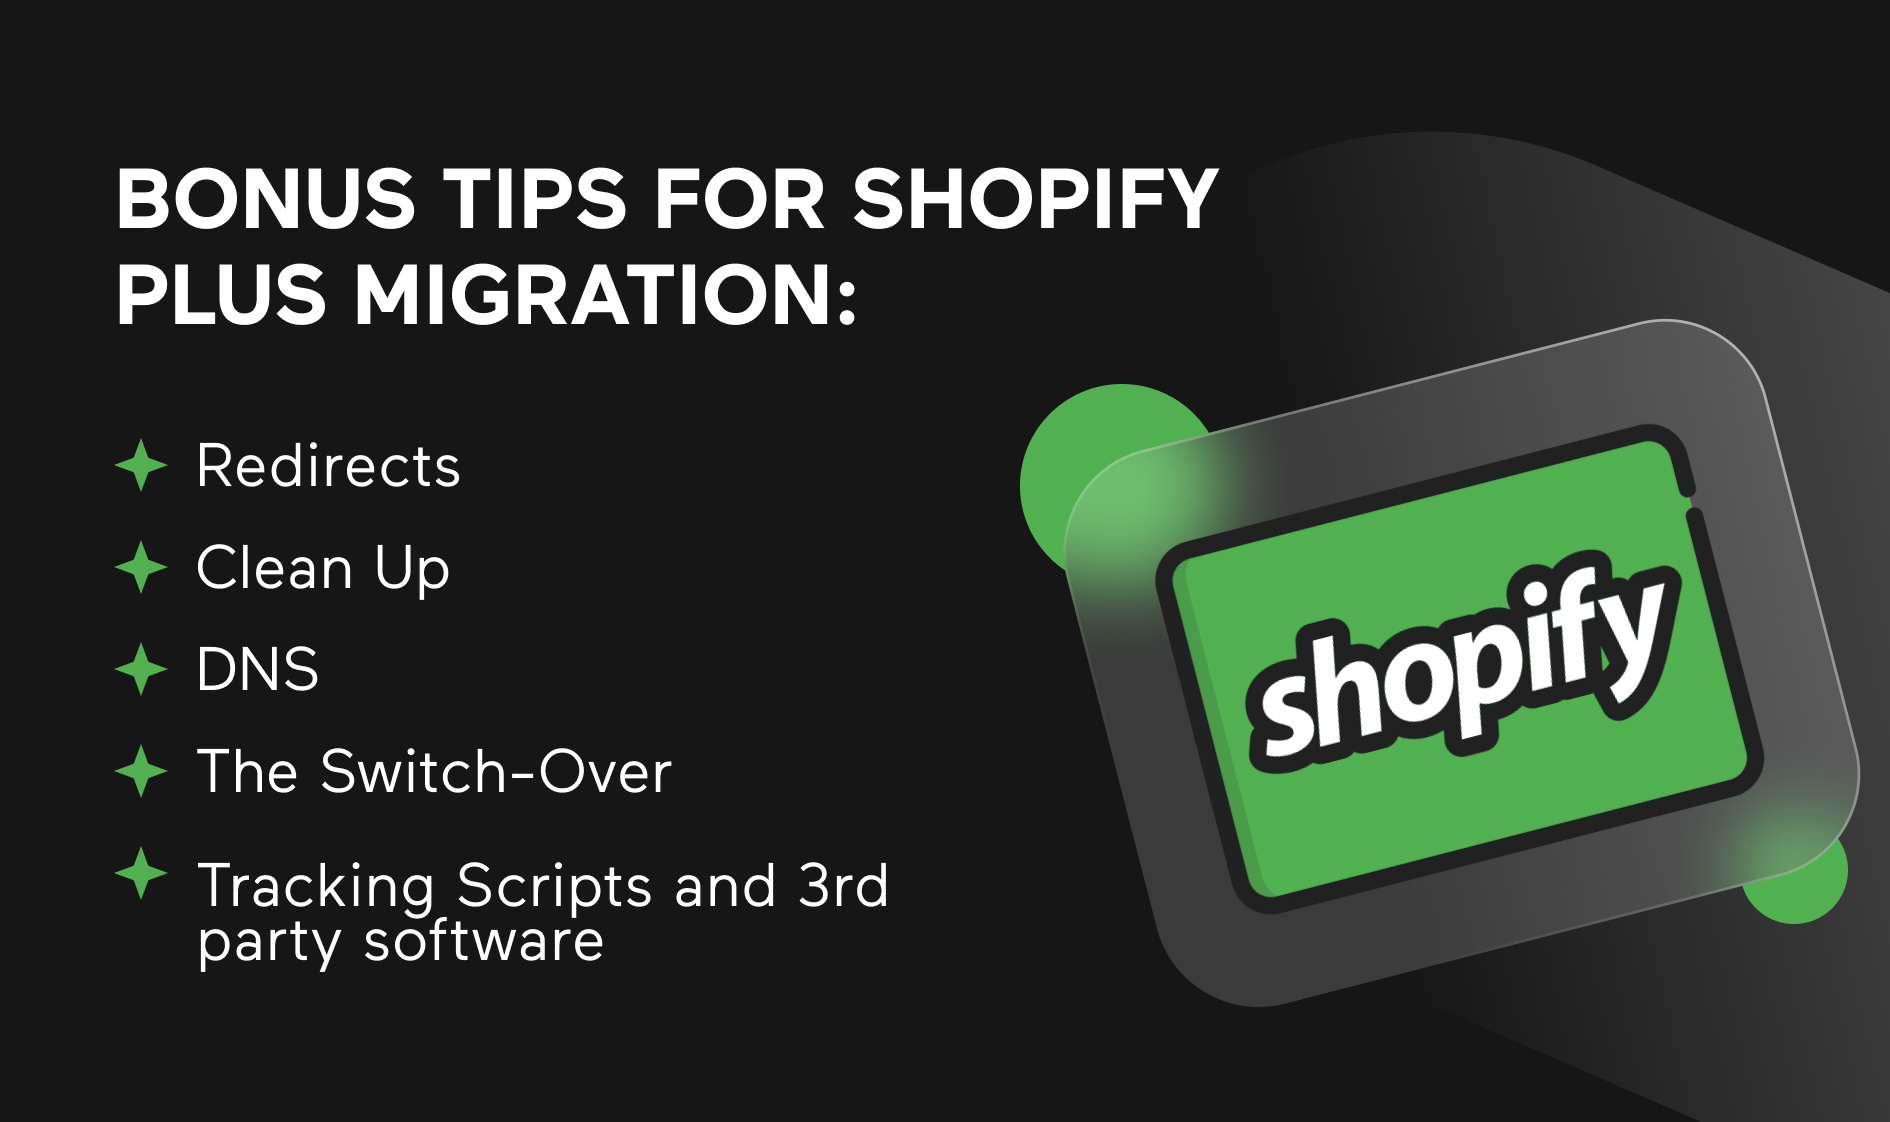 Bonus Tips for Shopify Plus Migration